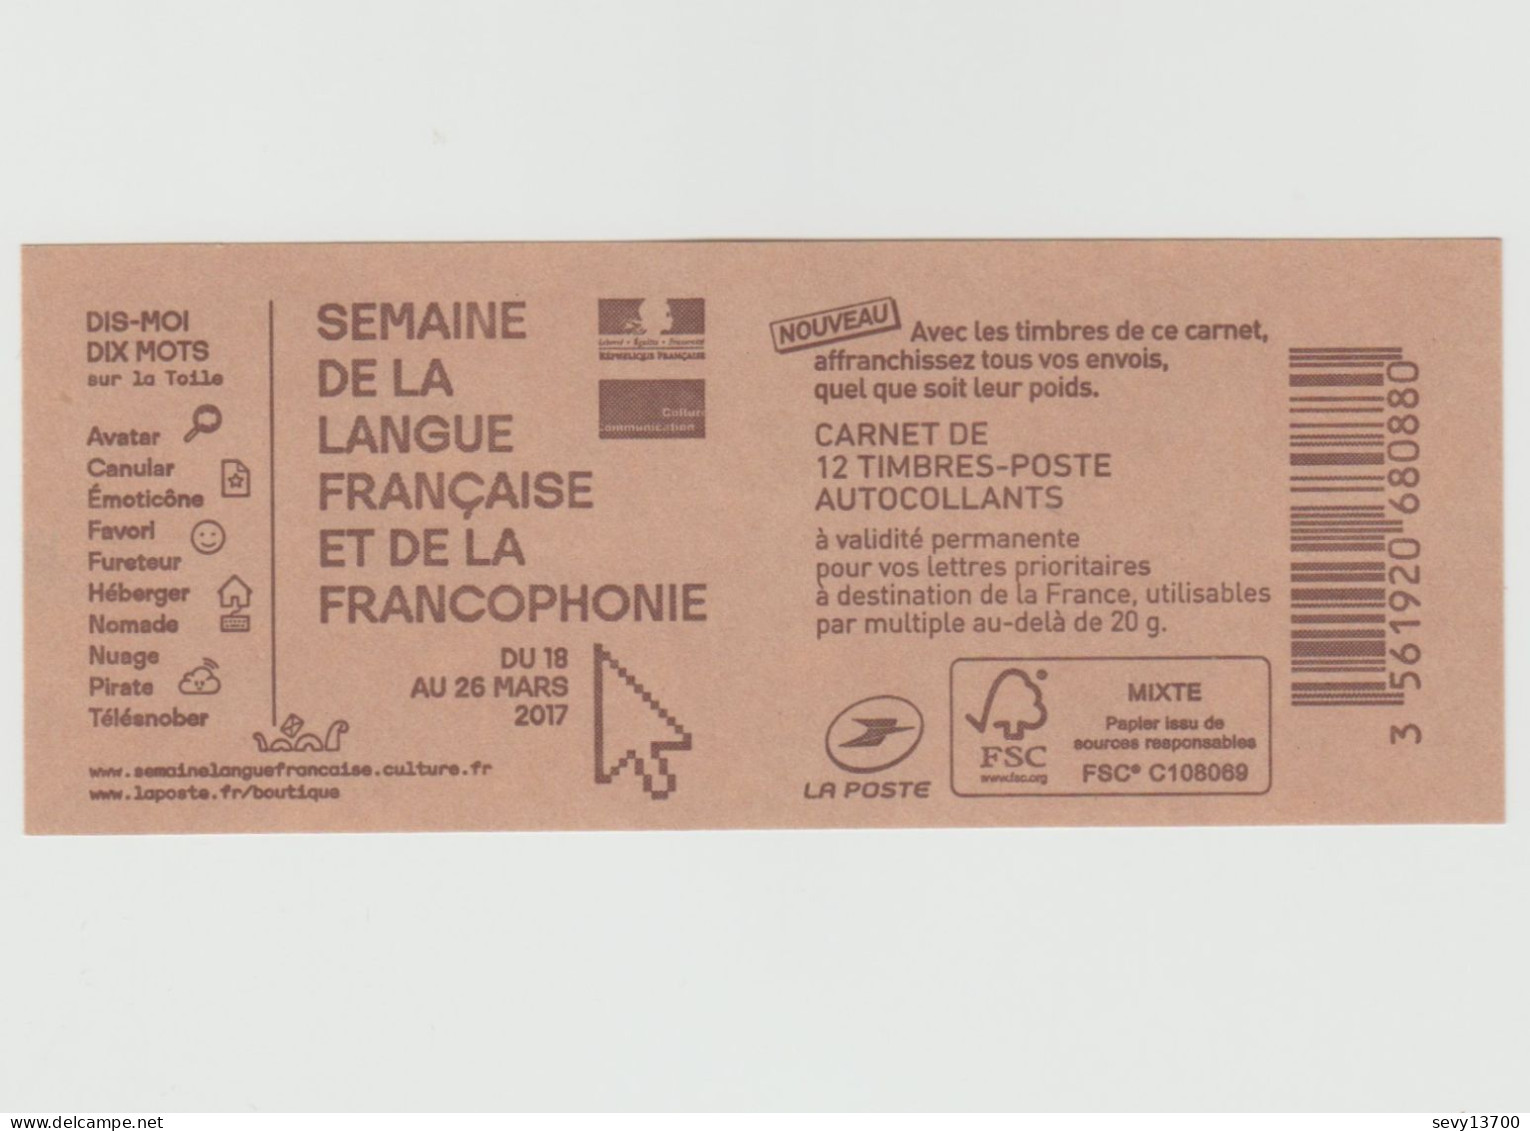 France 2017 Marianne Ciappa Kawena Carnet 12 Timbres Lettre Prioritaire Semaine De La Langue Française Et Francophonie - 2013-2018 Marianne Di Ciappa-Kawena